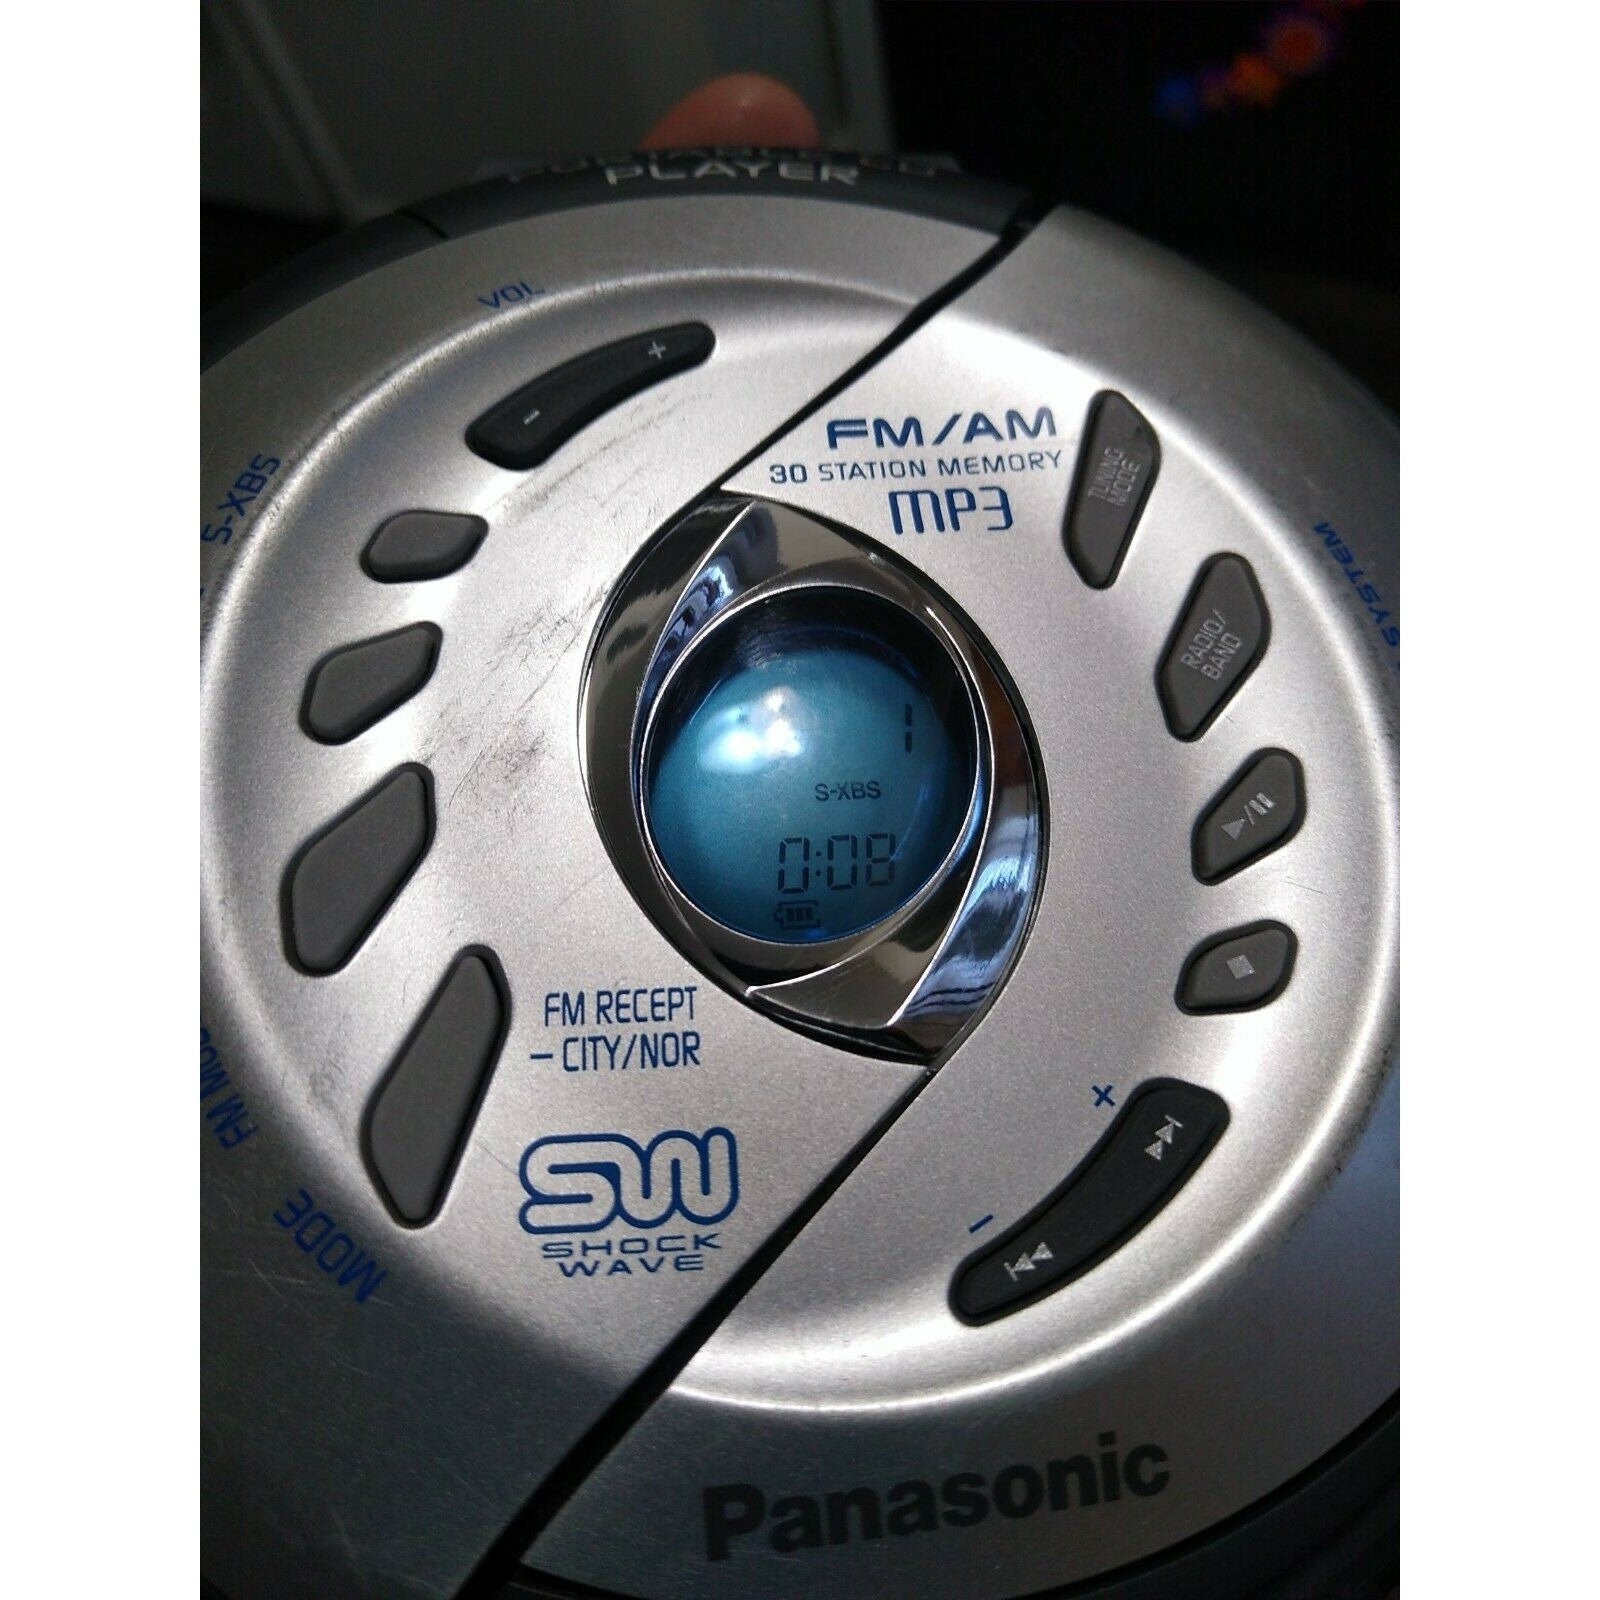 Panasonic Shock Wave sl-sw960v Portable MP3 FM, AM Radio CD Player